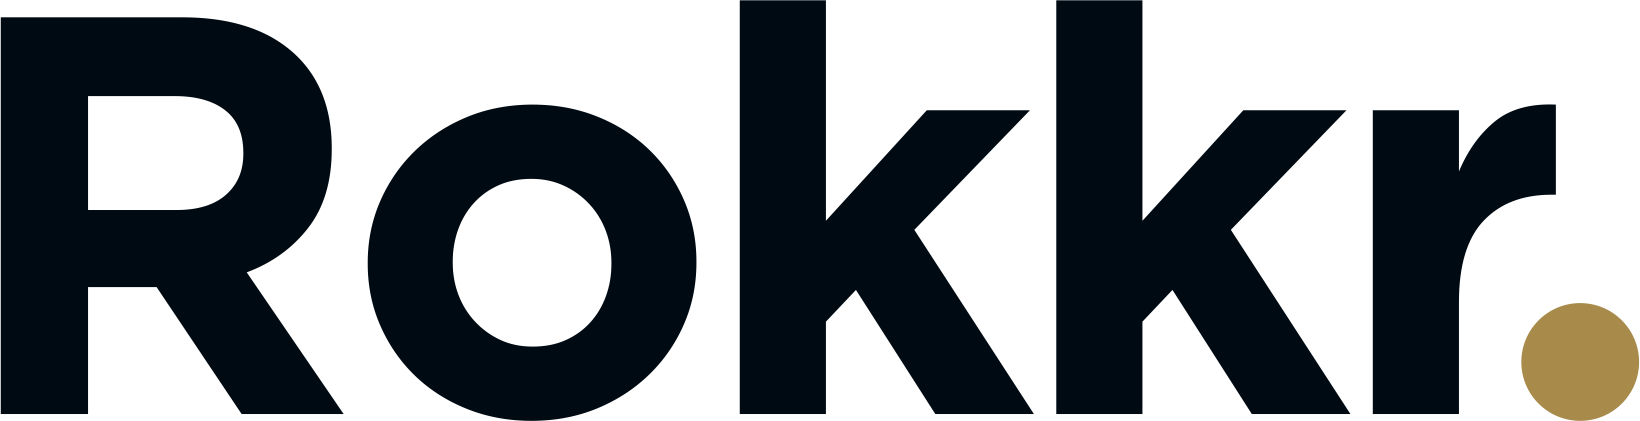 rokkr.net